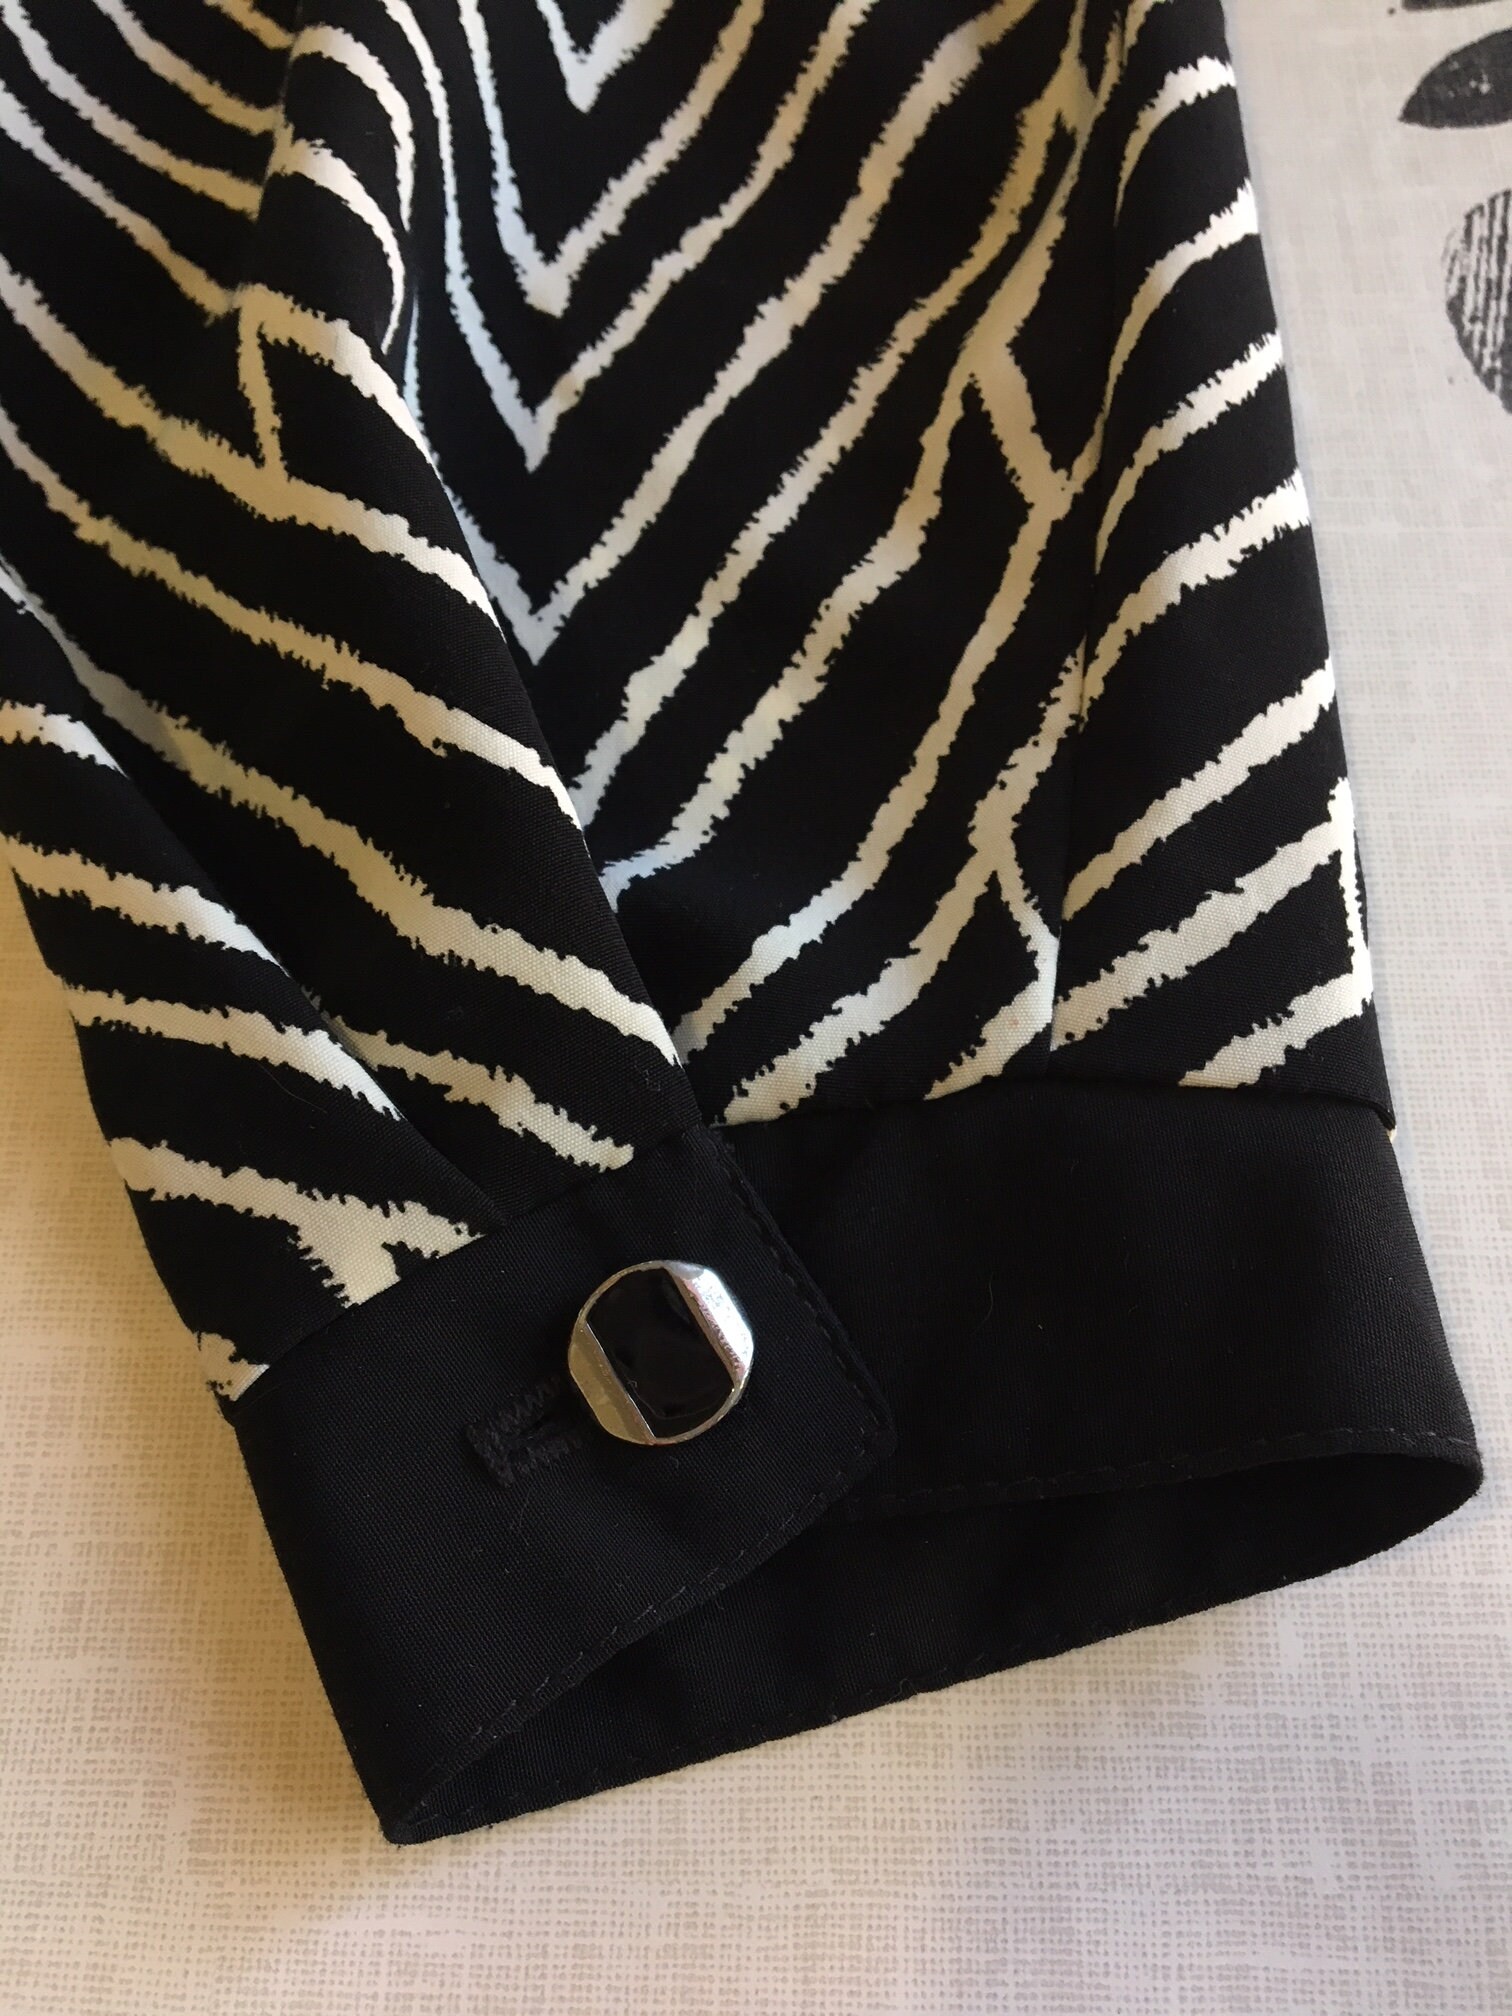 80s Zebra Print Bomber Jacket / Silky Soft Lightweight Coat | Etsy